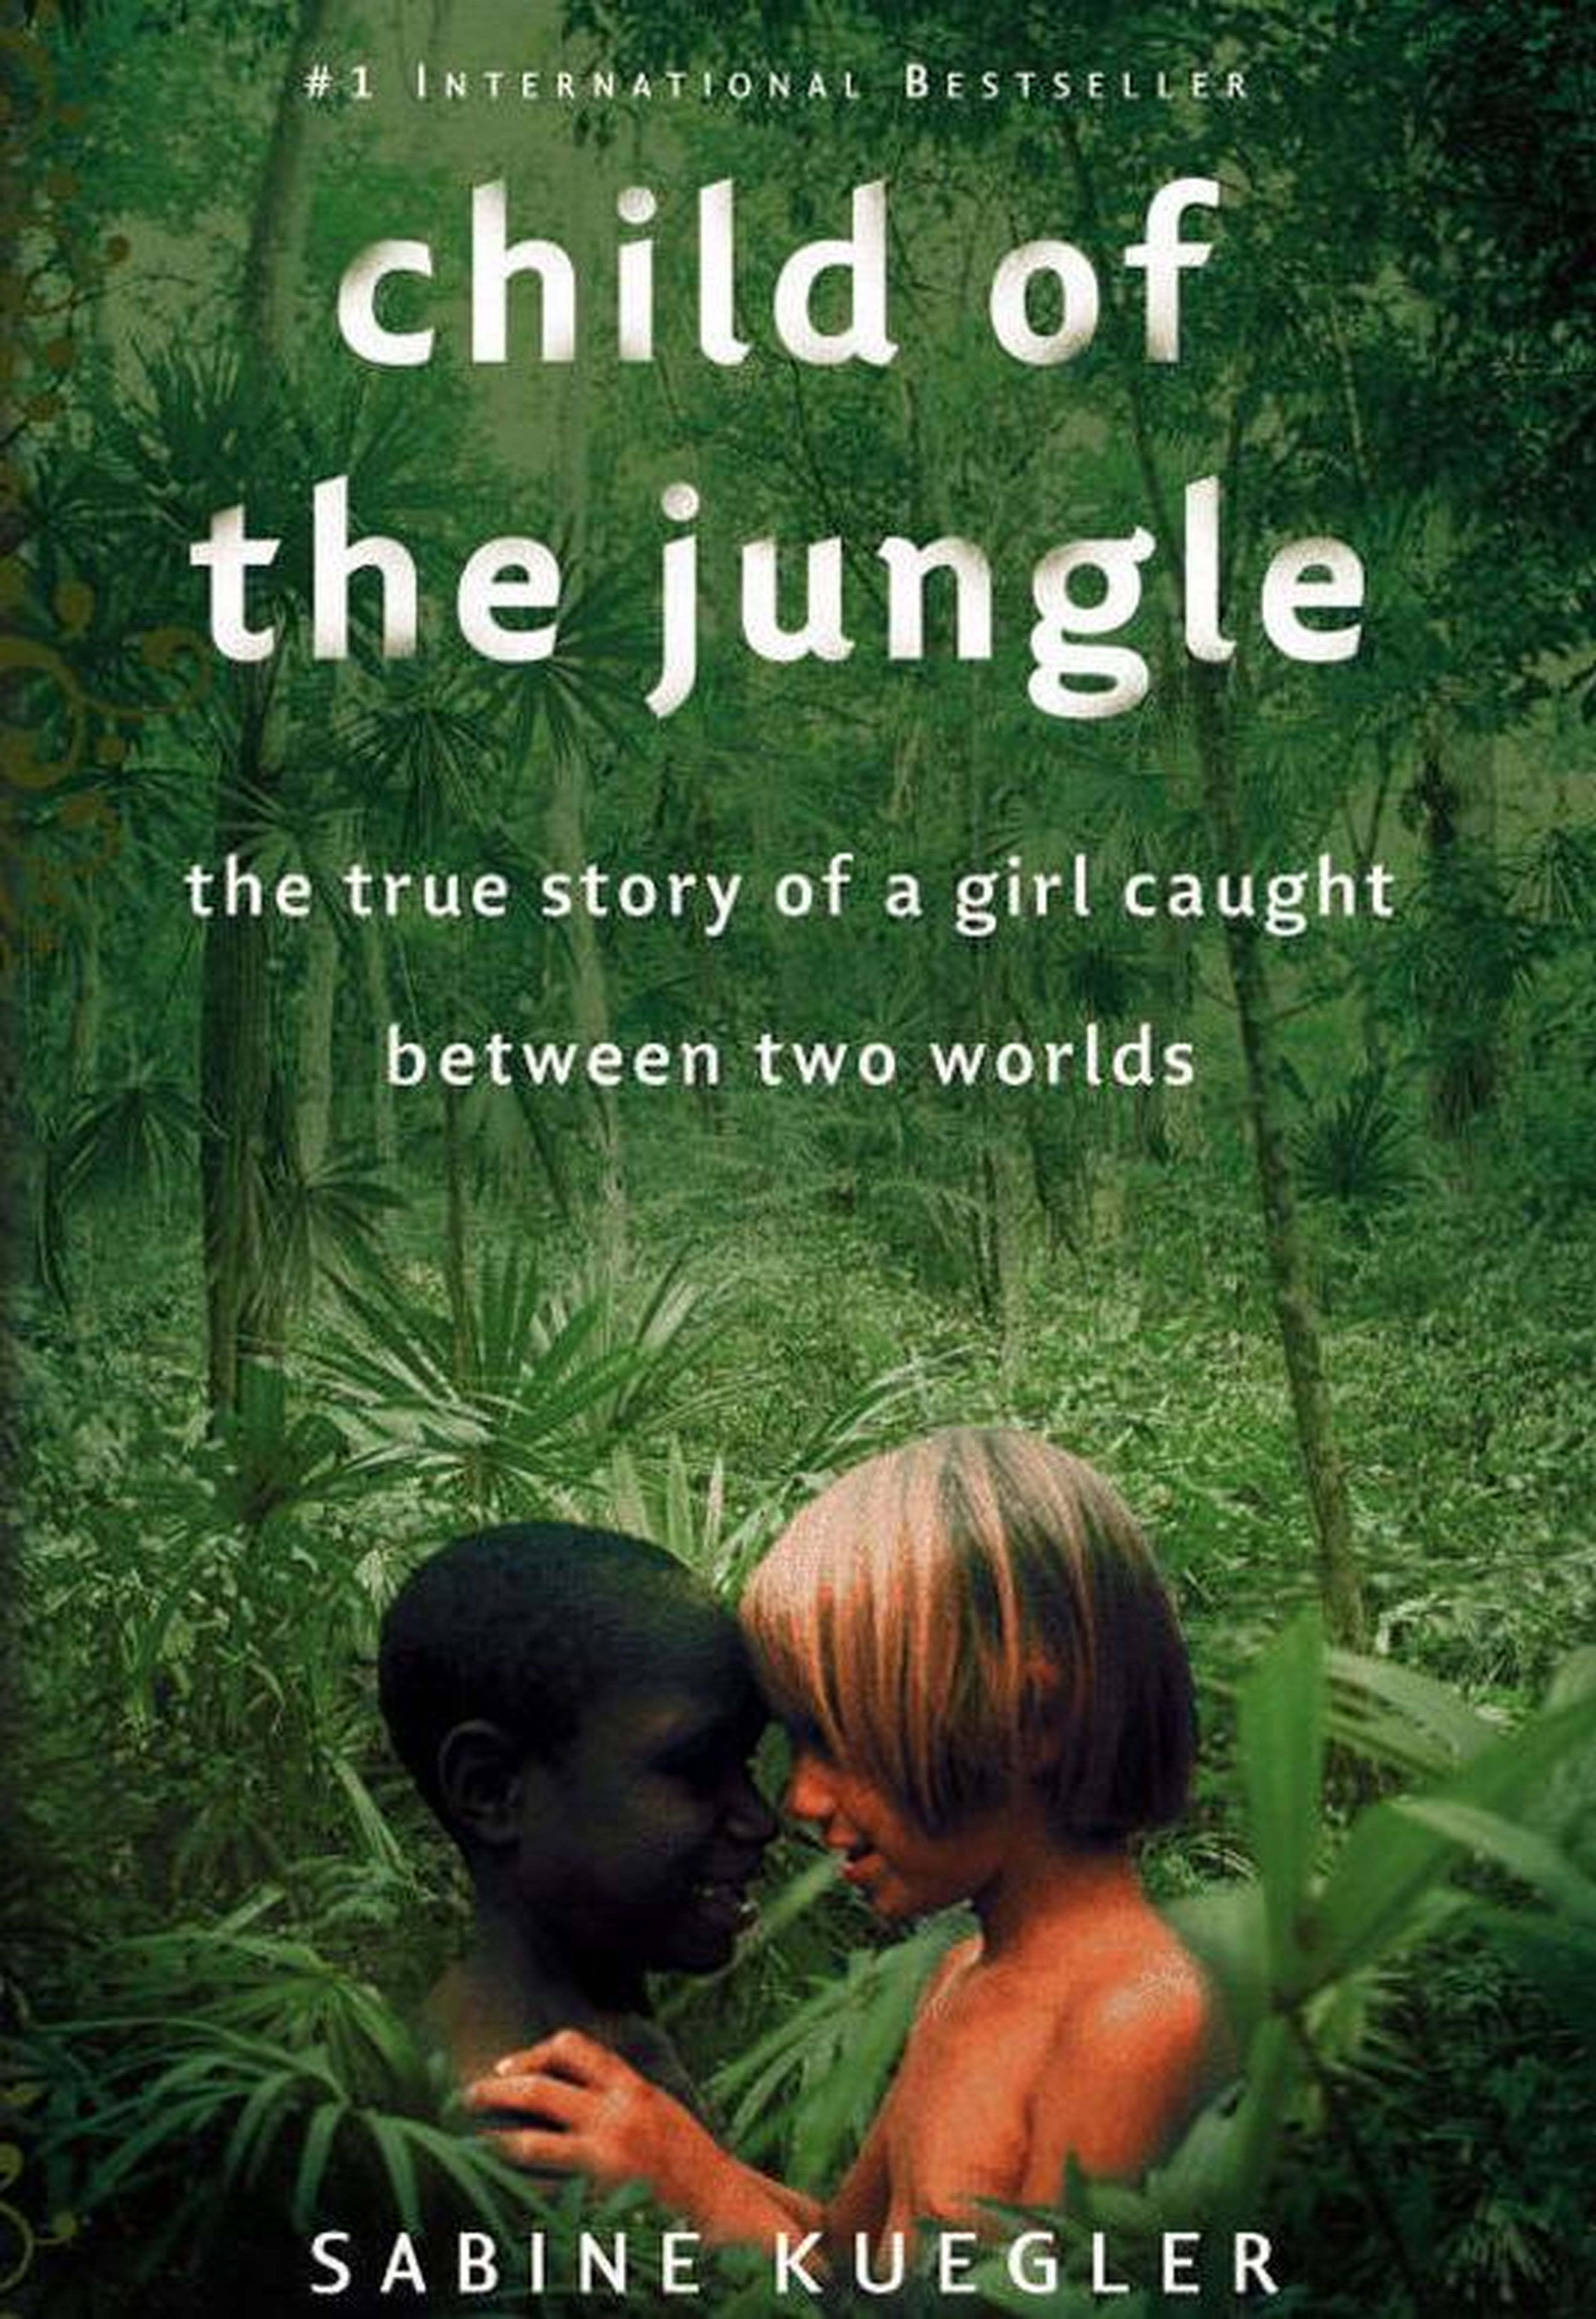 Jared Diamond: "Child of the Jungle" by Sabine Kuegler